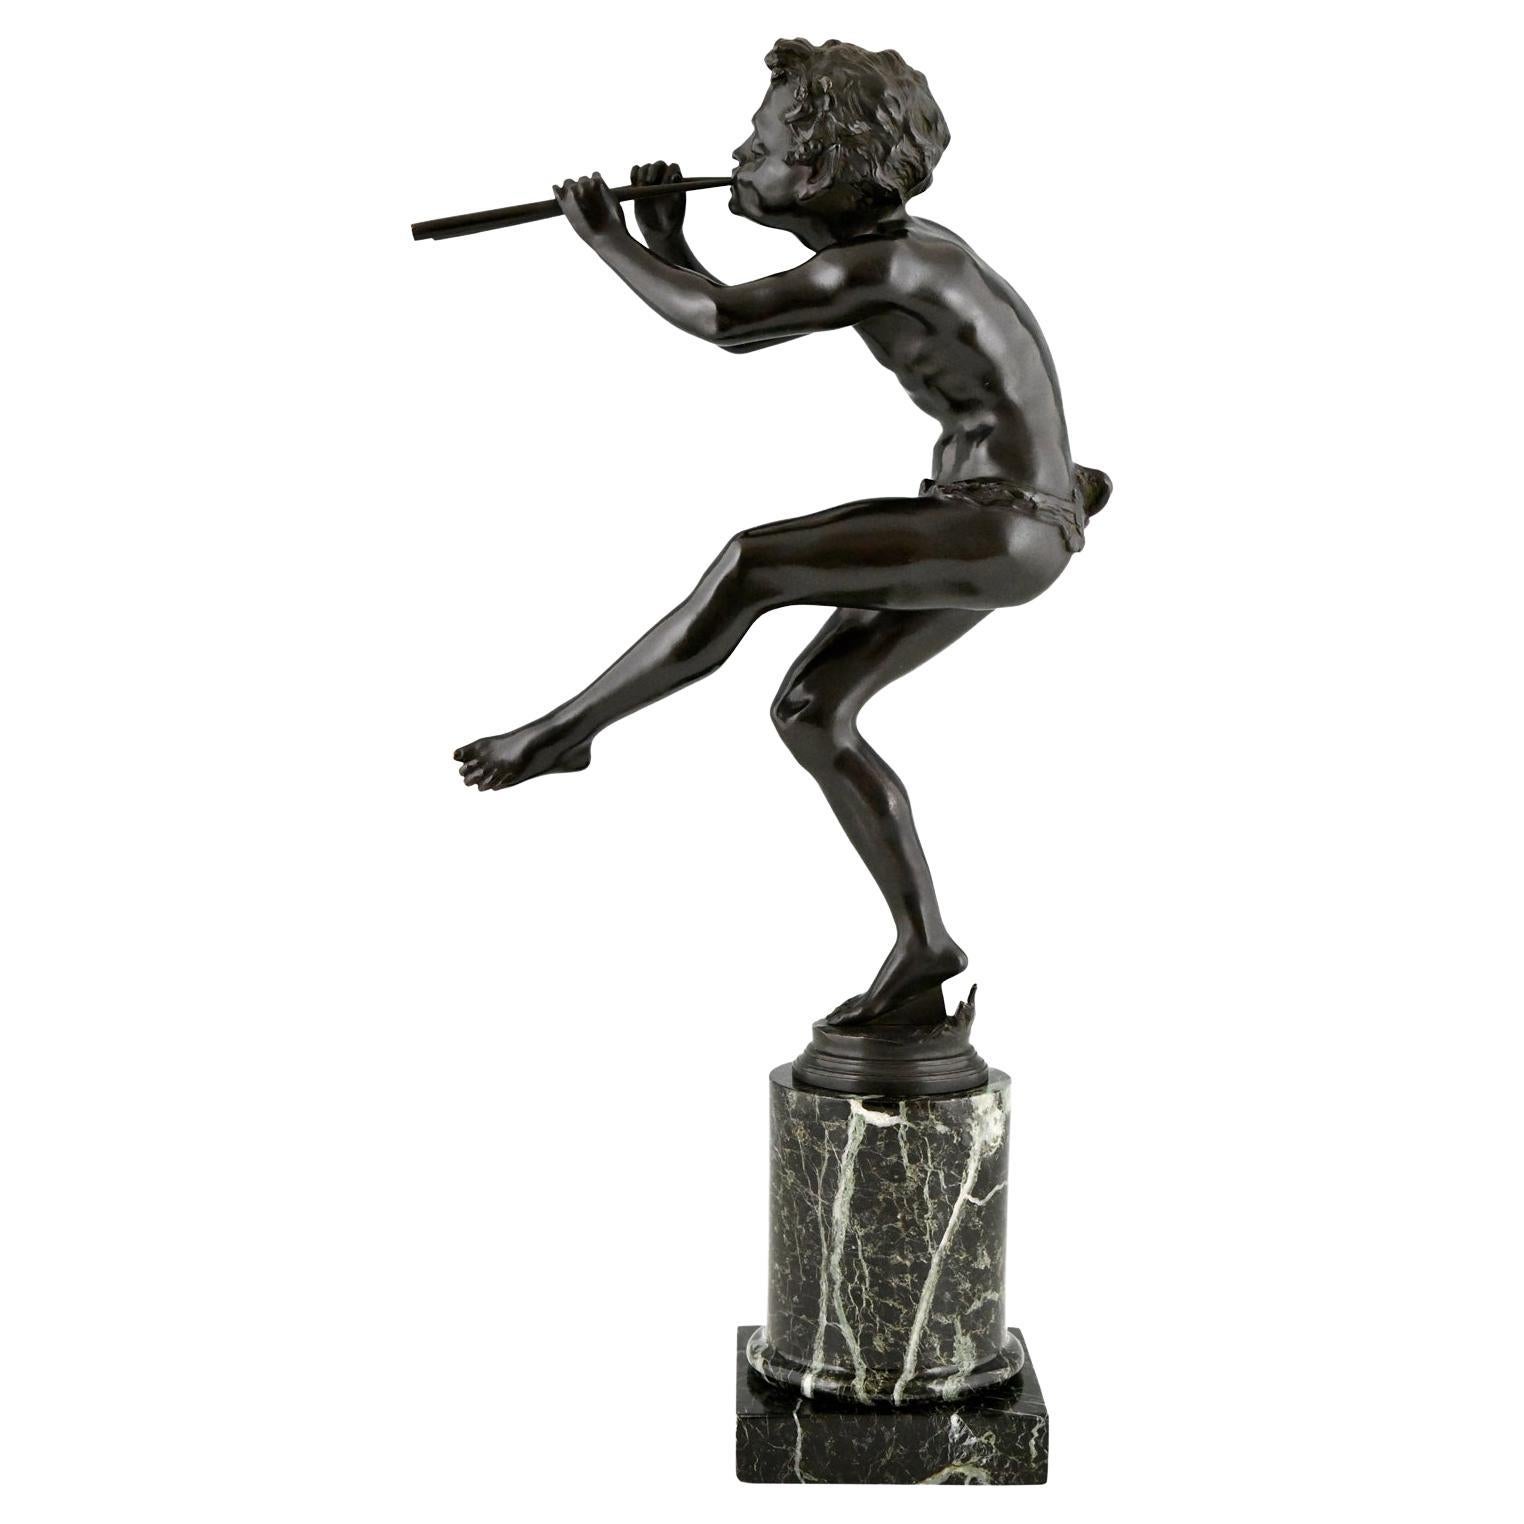 Art Deco Bronze Sculpture Dancing Faun with Flutes by Edouard Drouot 1920